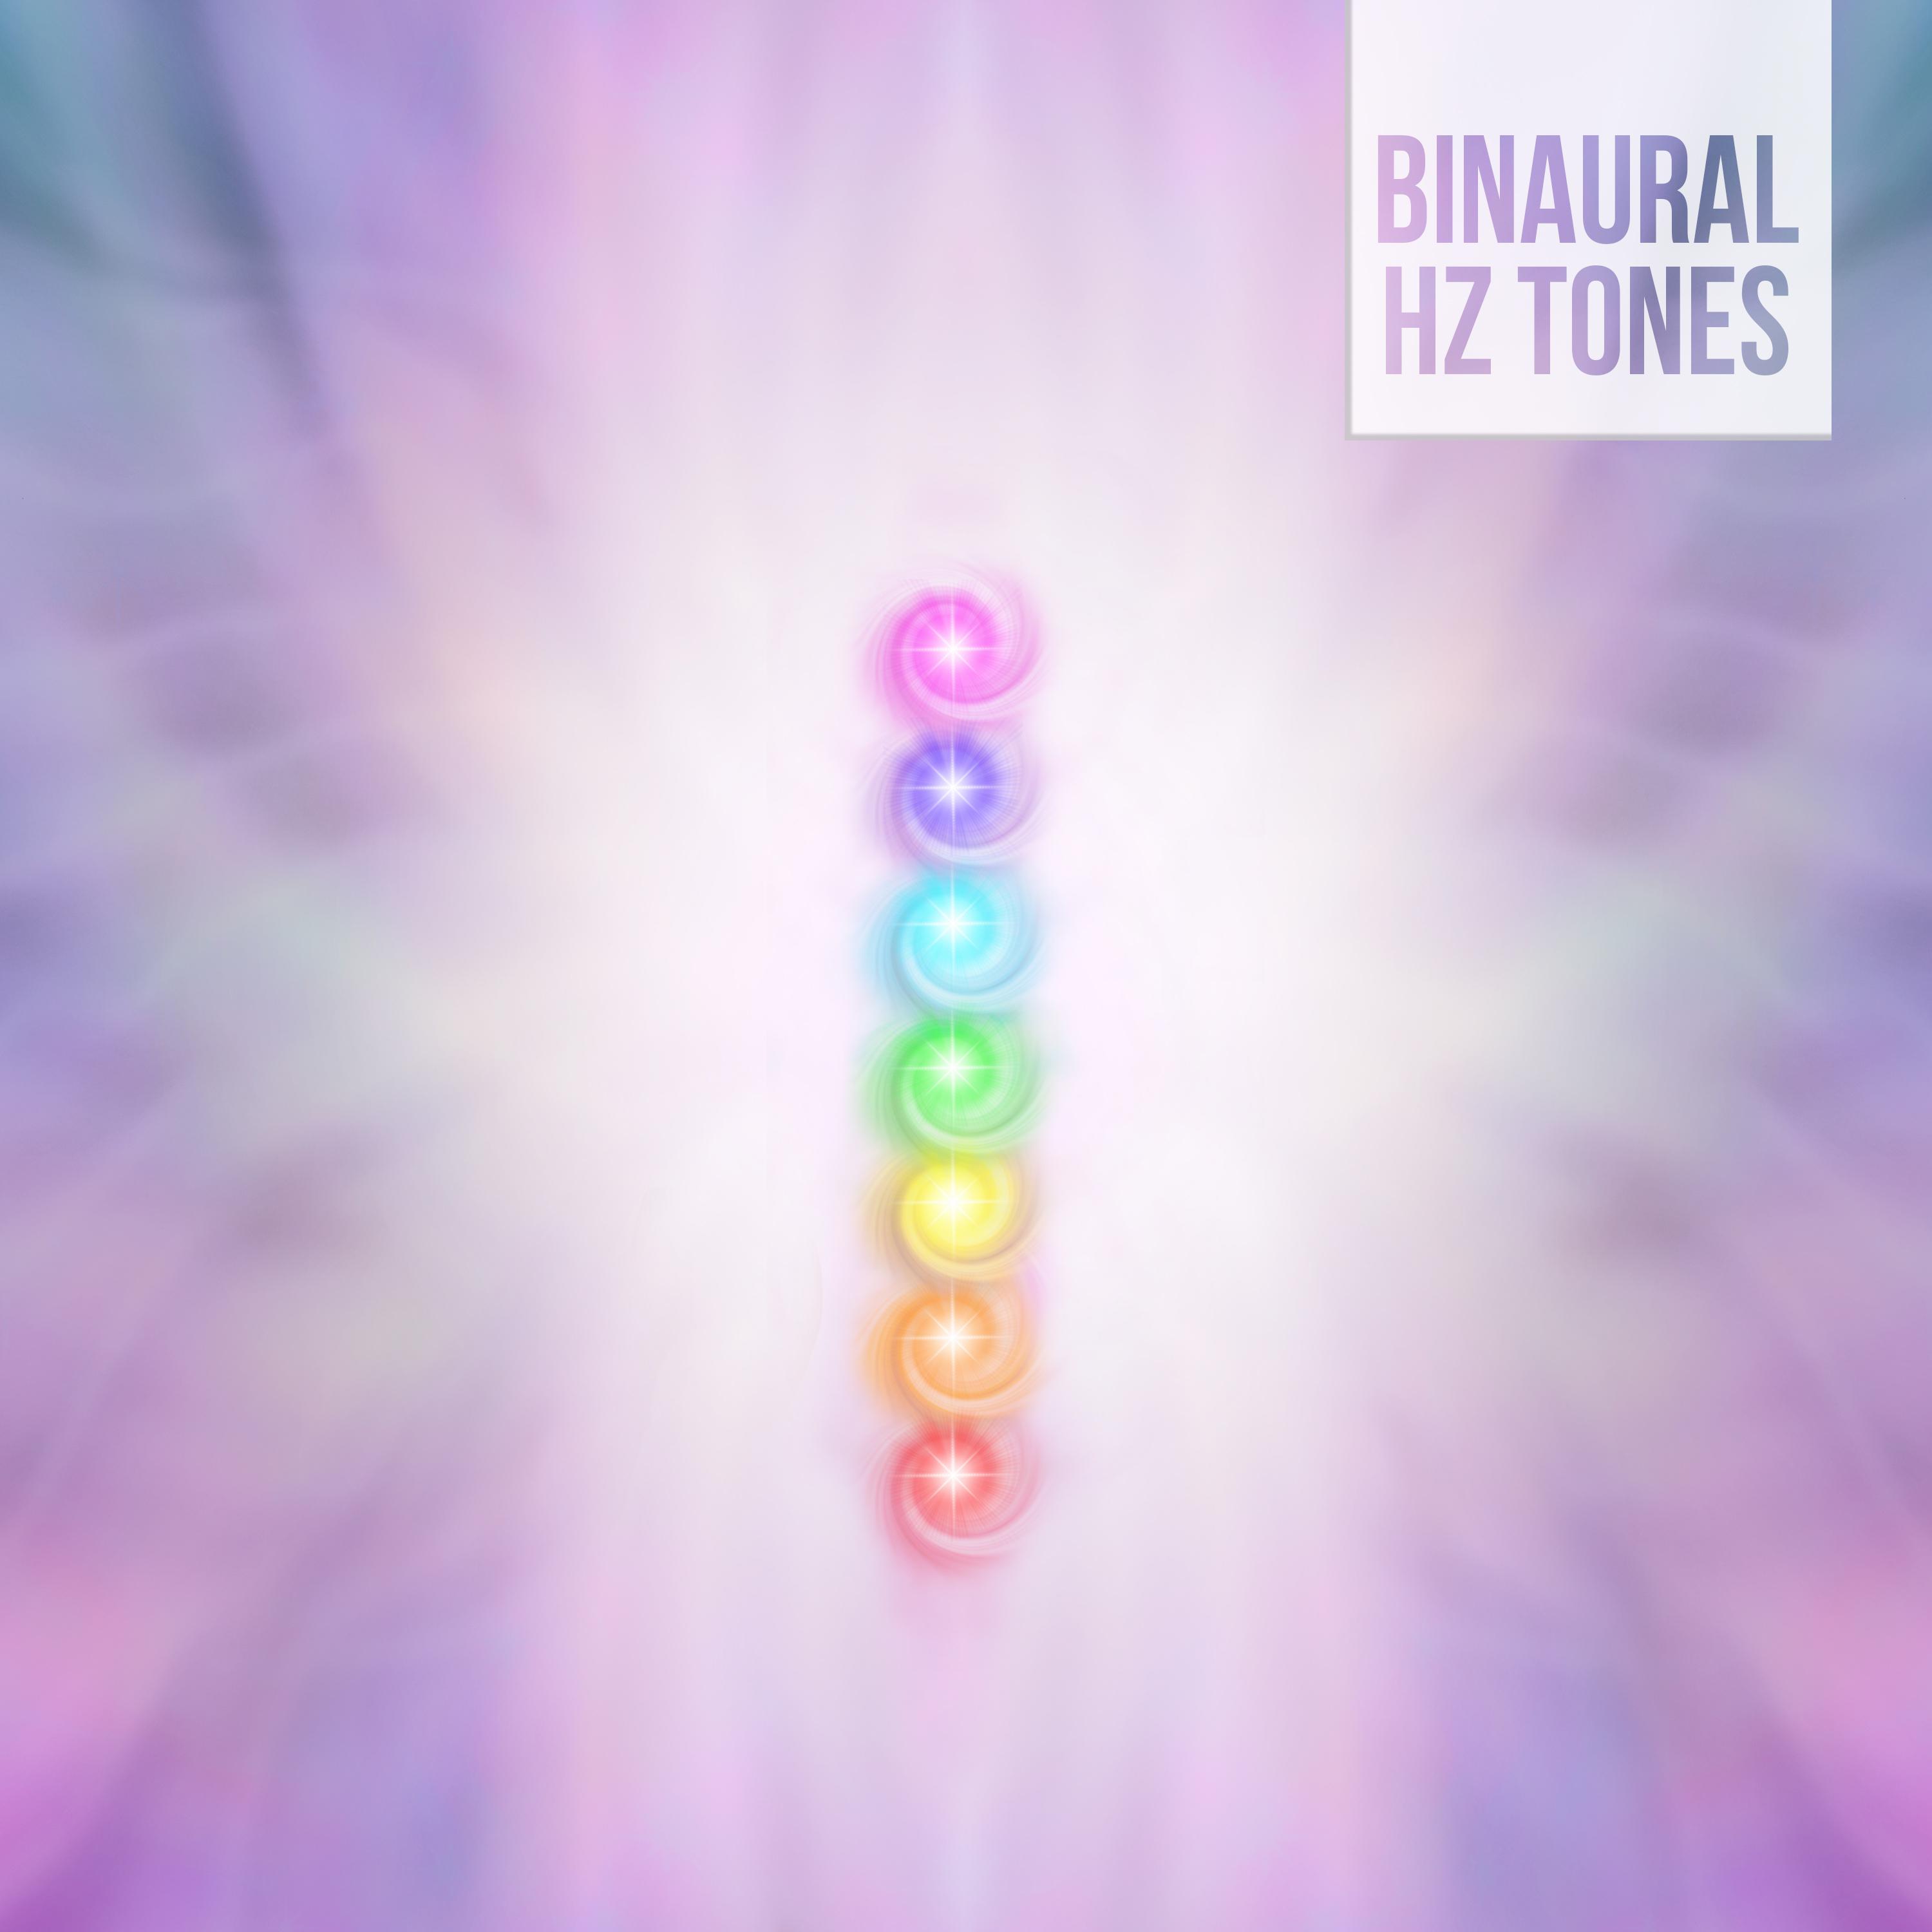 Stimulate & Balance 216 Hz